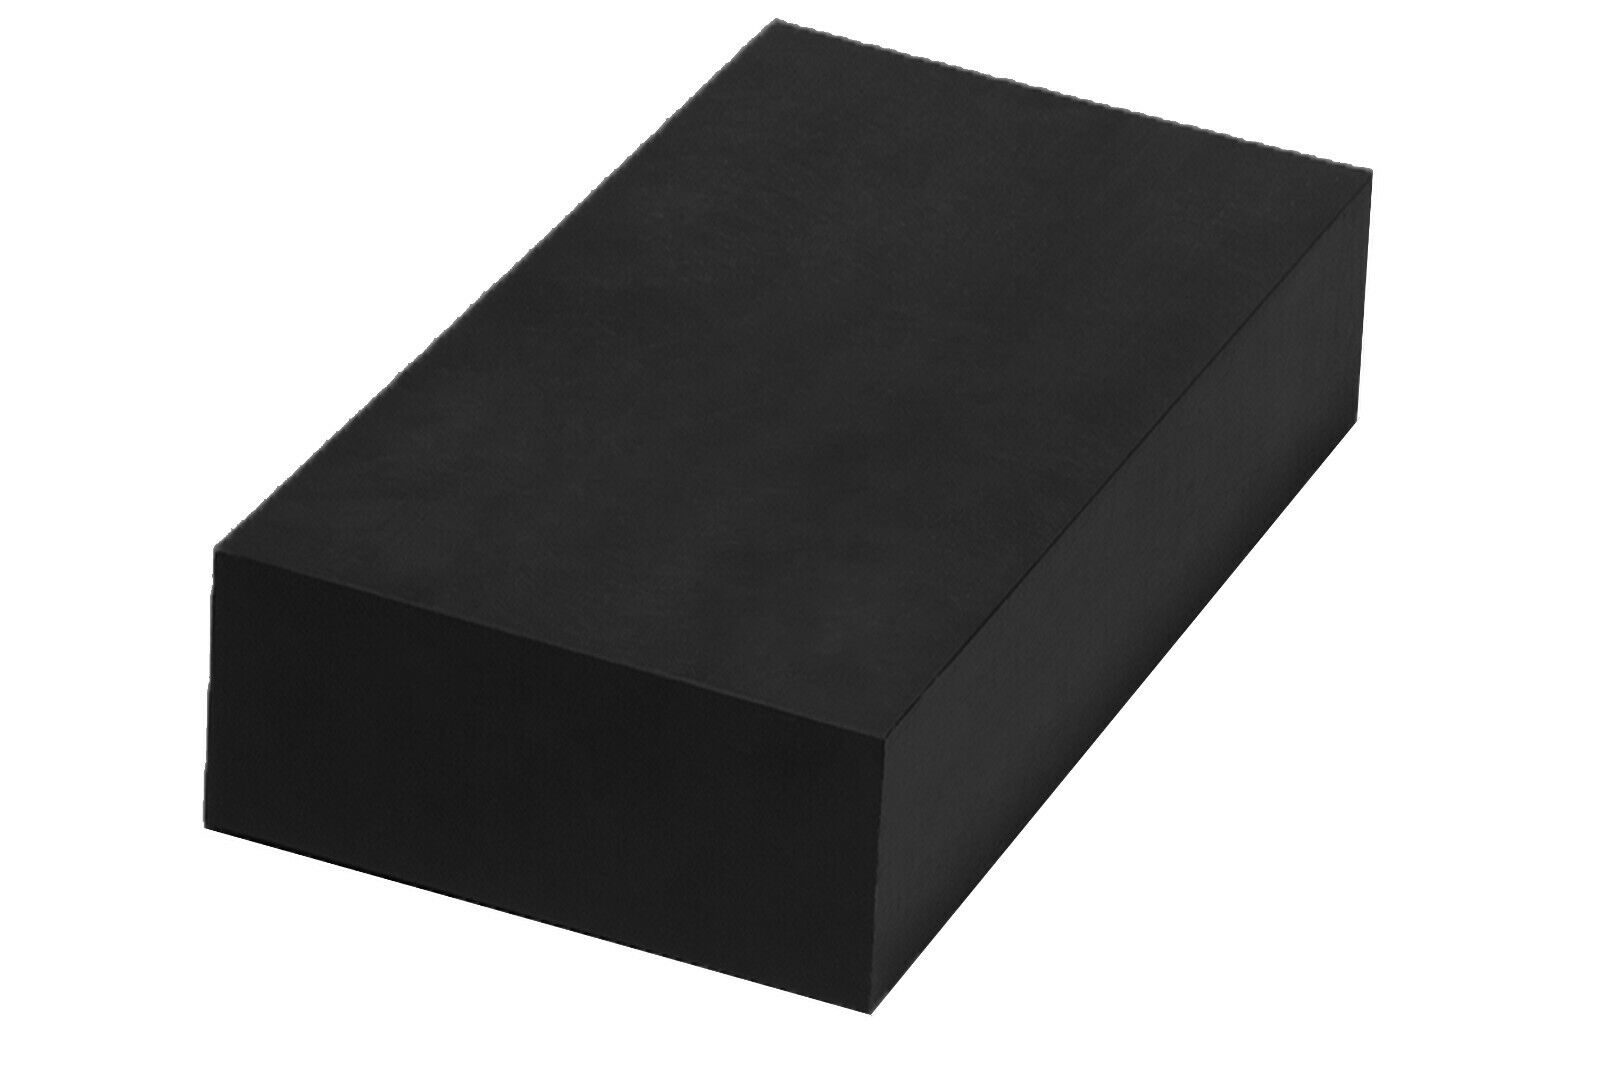 Plastic Blocks For Machining (black) - 1.5" X 6" X 12" - Abs Sheet